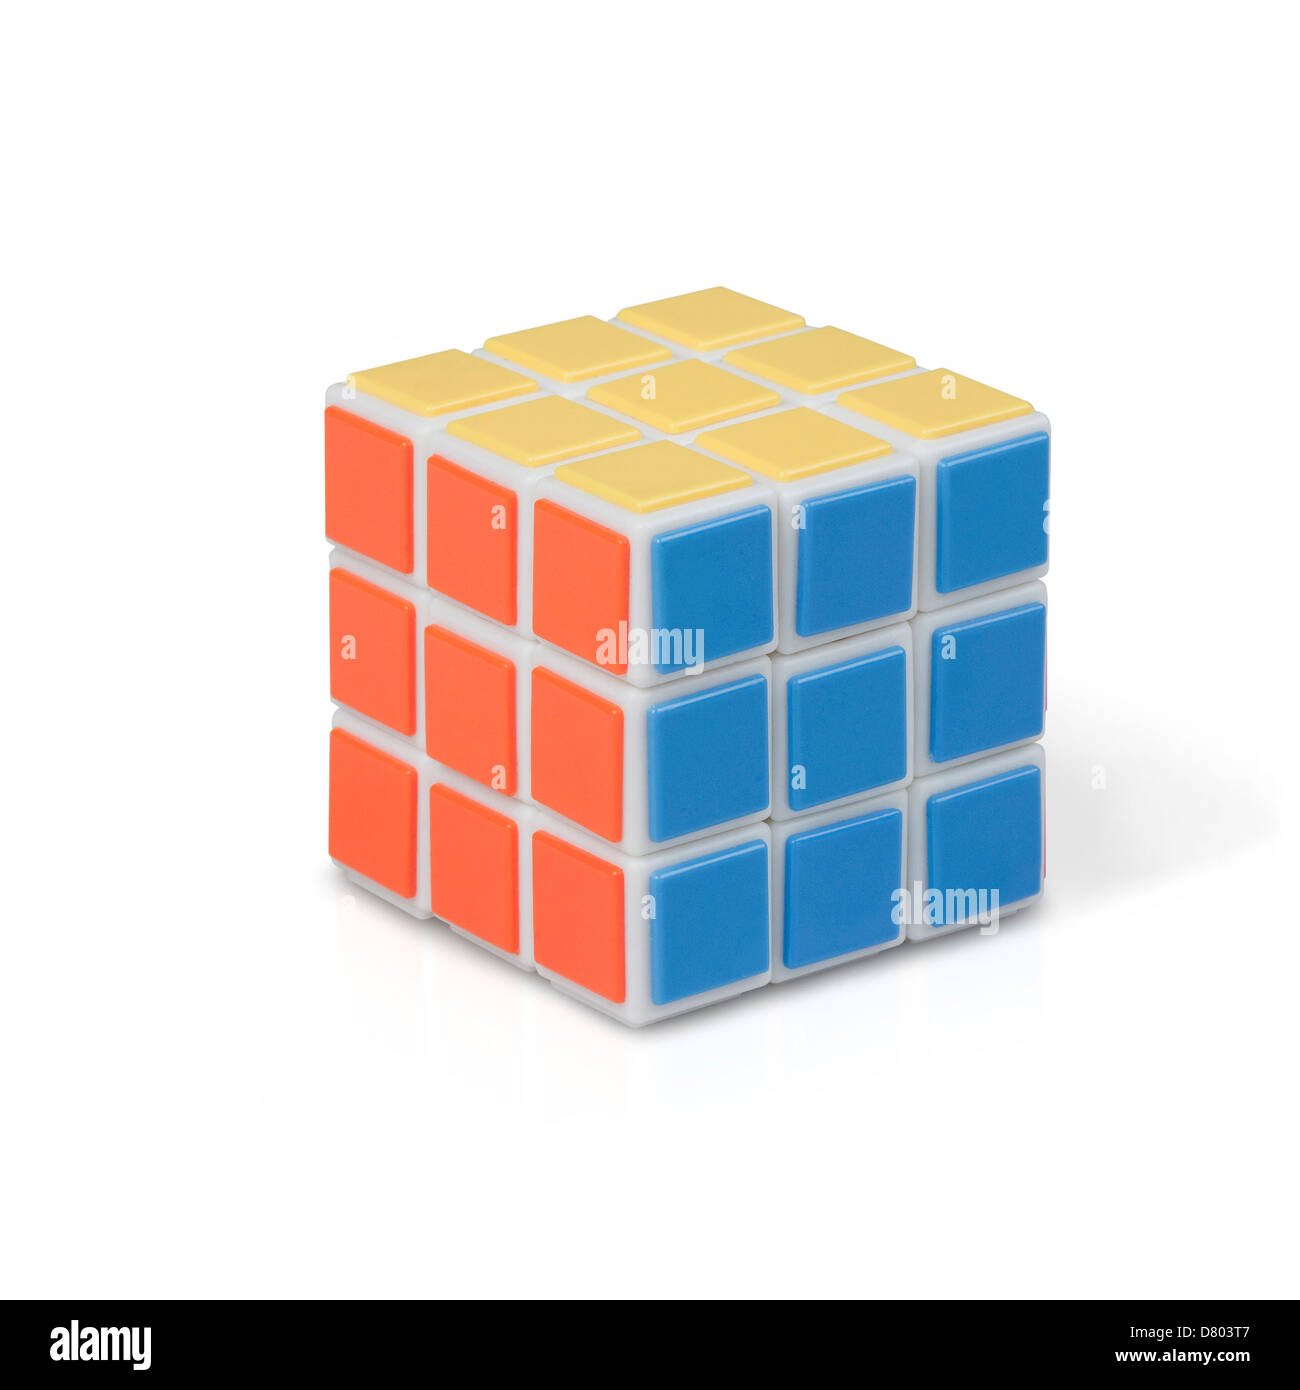 rubic cube on white background Stock Photo